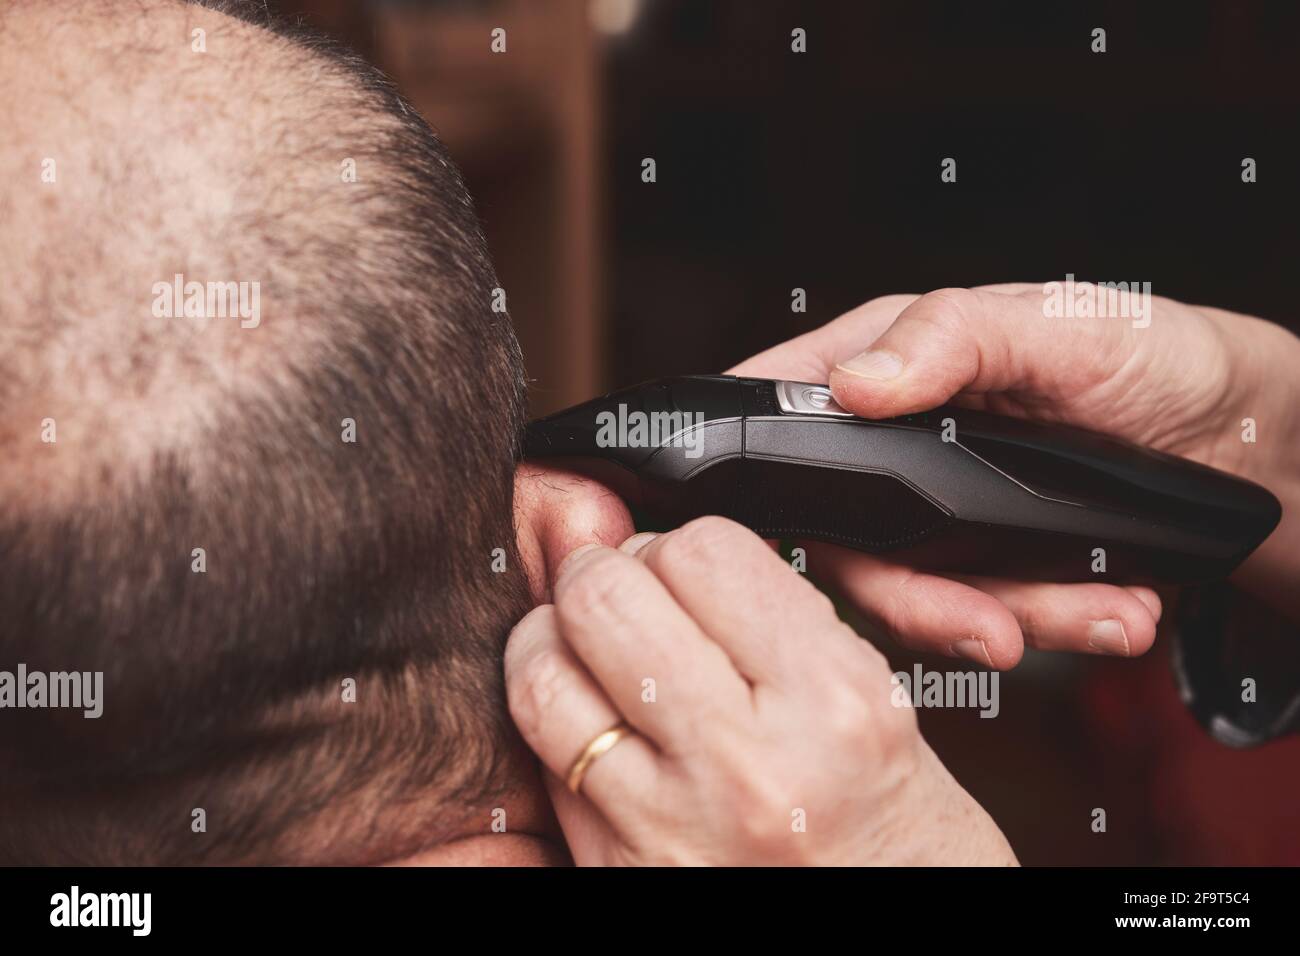 Wife cutting husbands hair at home with a haircut machine or hair clipper. Stock Photo